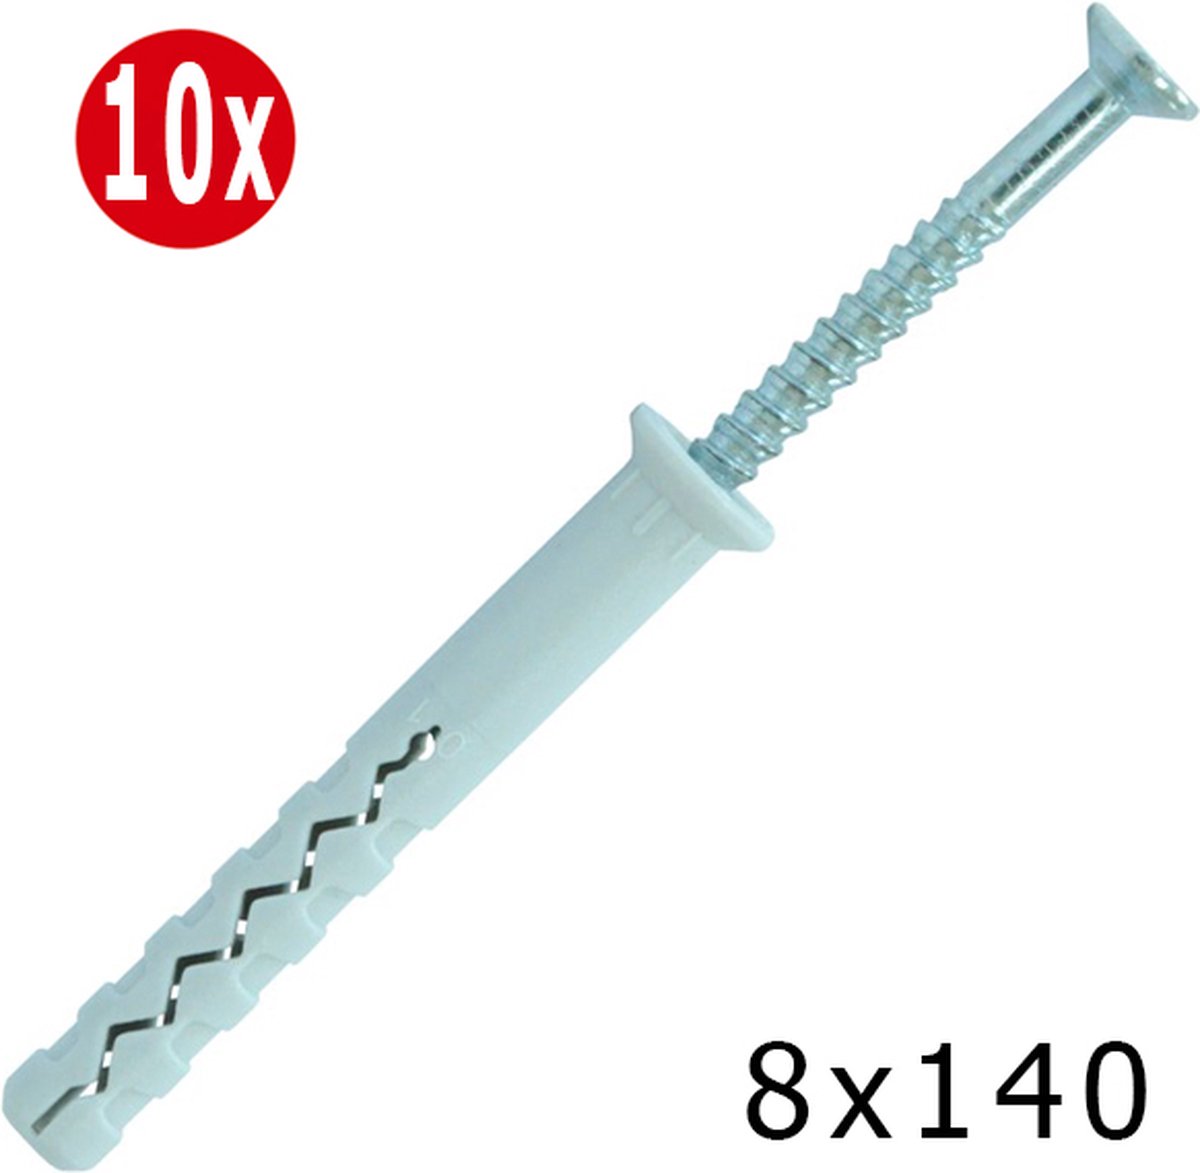 Tornitrex® slagplug 8x140 (10x)